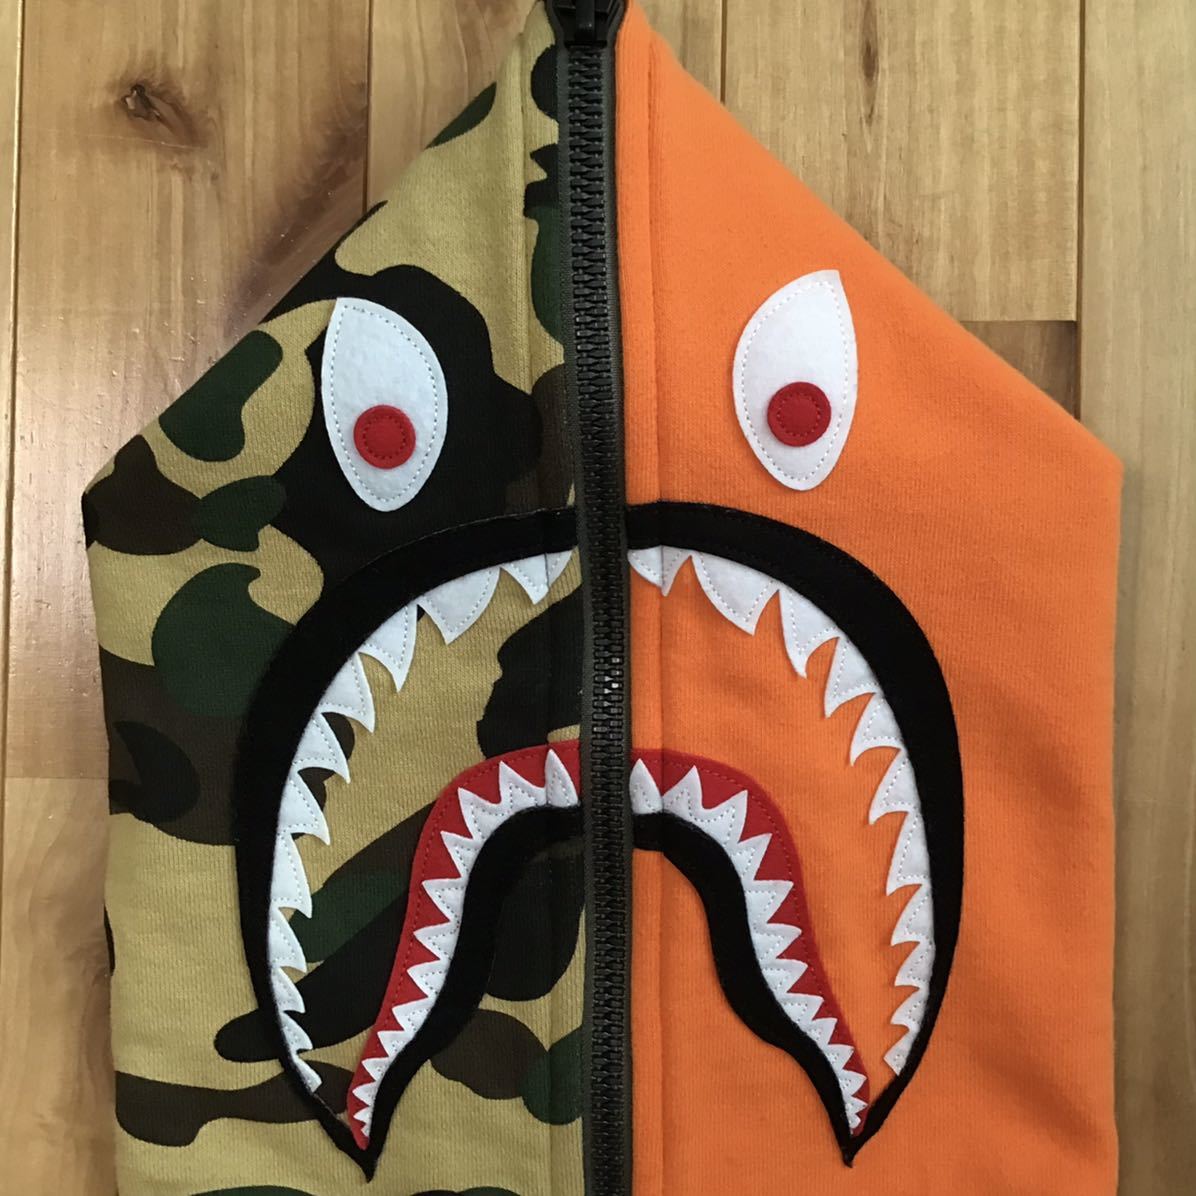 Crazy camo シャーク パーカー Sサイズ mad shark full zip hoodie a bathing ape BAPE 迷彩 エイプ ベイプ アベイシングエイプ z266_画像3